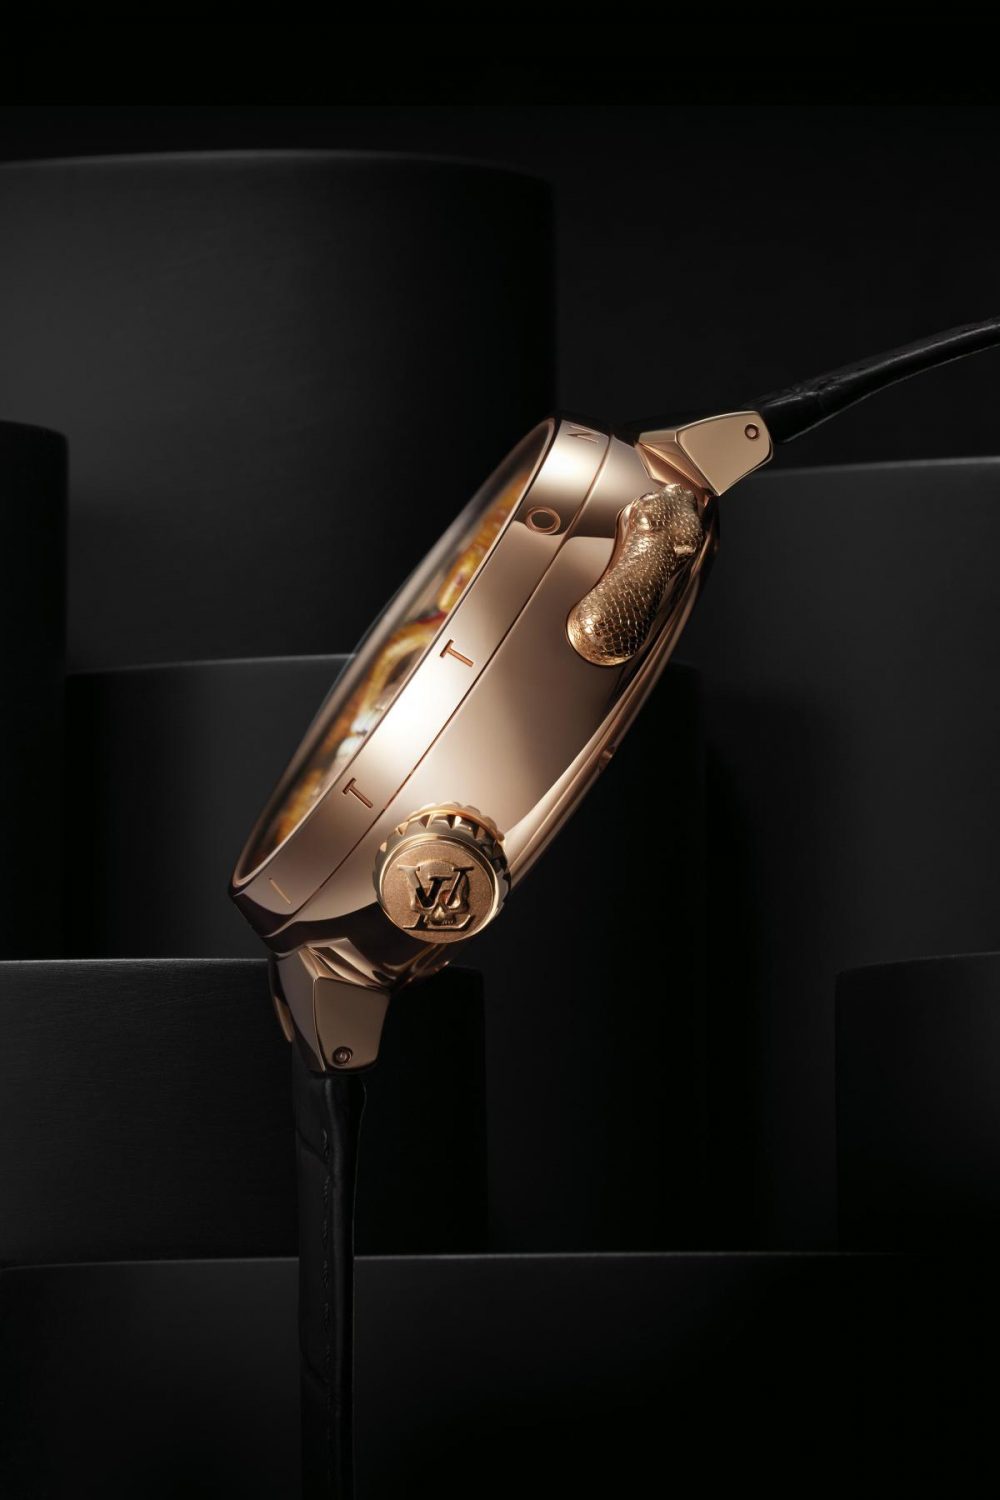 Watch Expert Reacts to the Utterly Insane $459,000 Louis Vuitton Tambour  Carpe Diem 